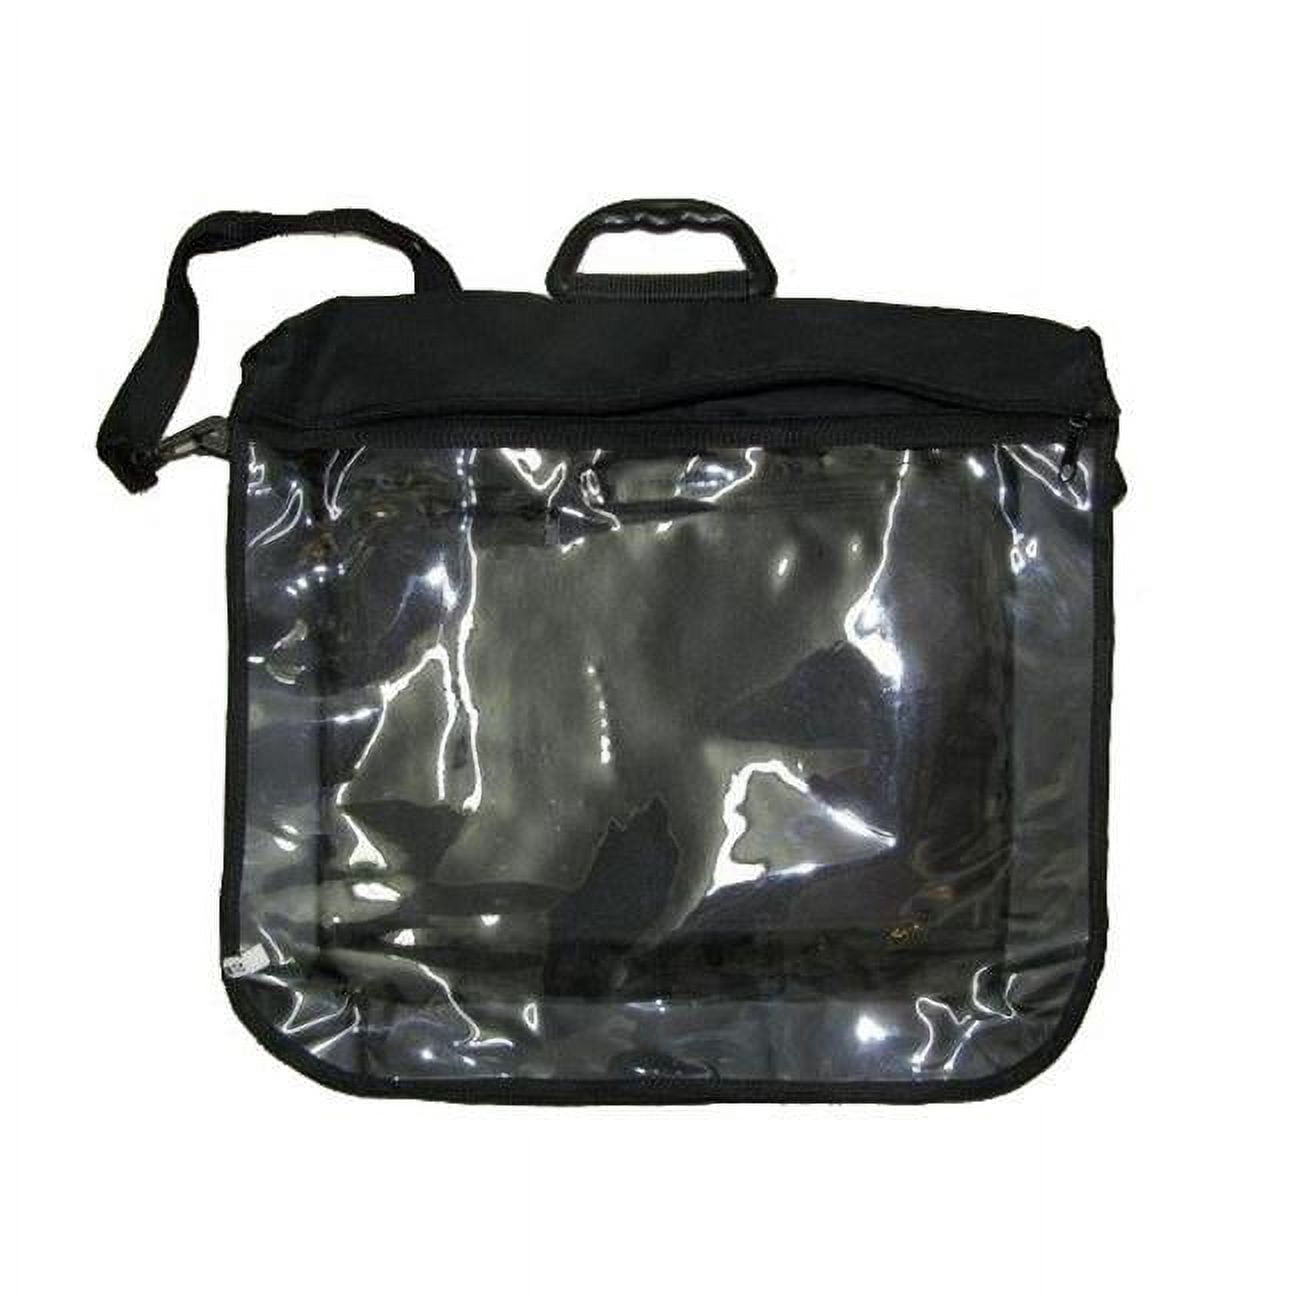 Picture of Nua 65112 15 x 14 in. Medium Tallit Tote Bag